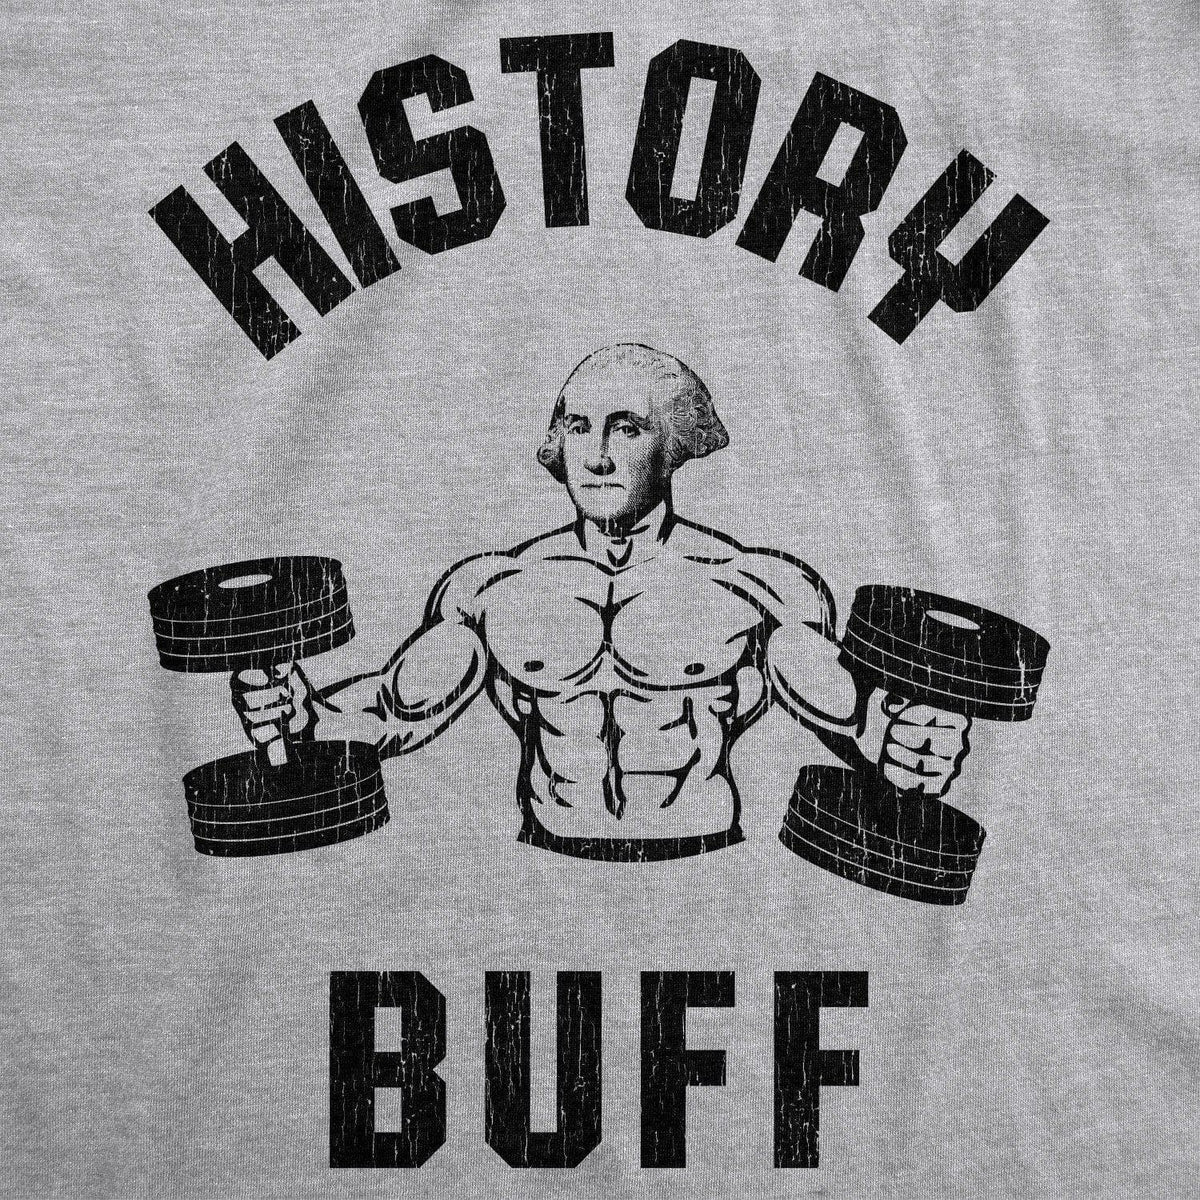 History Buff Men&#39;s Tshirt  -  Crazy Dog T-Shirts